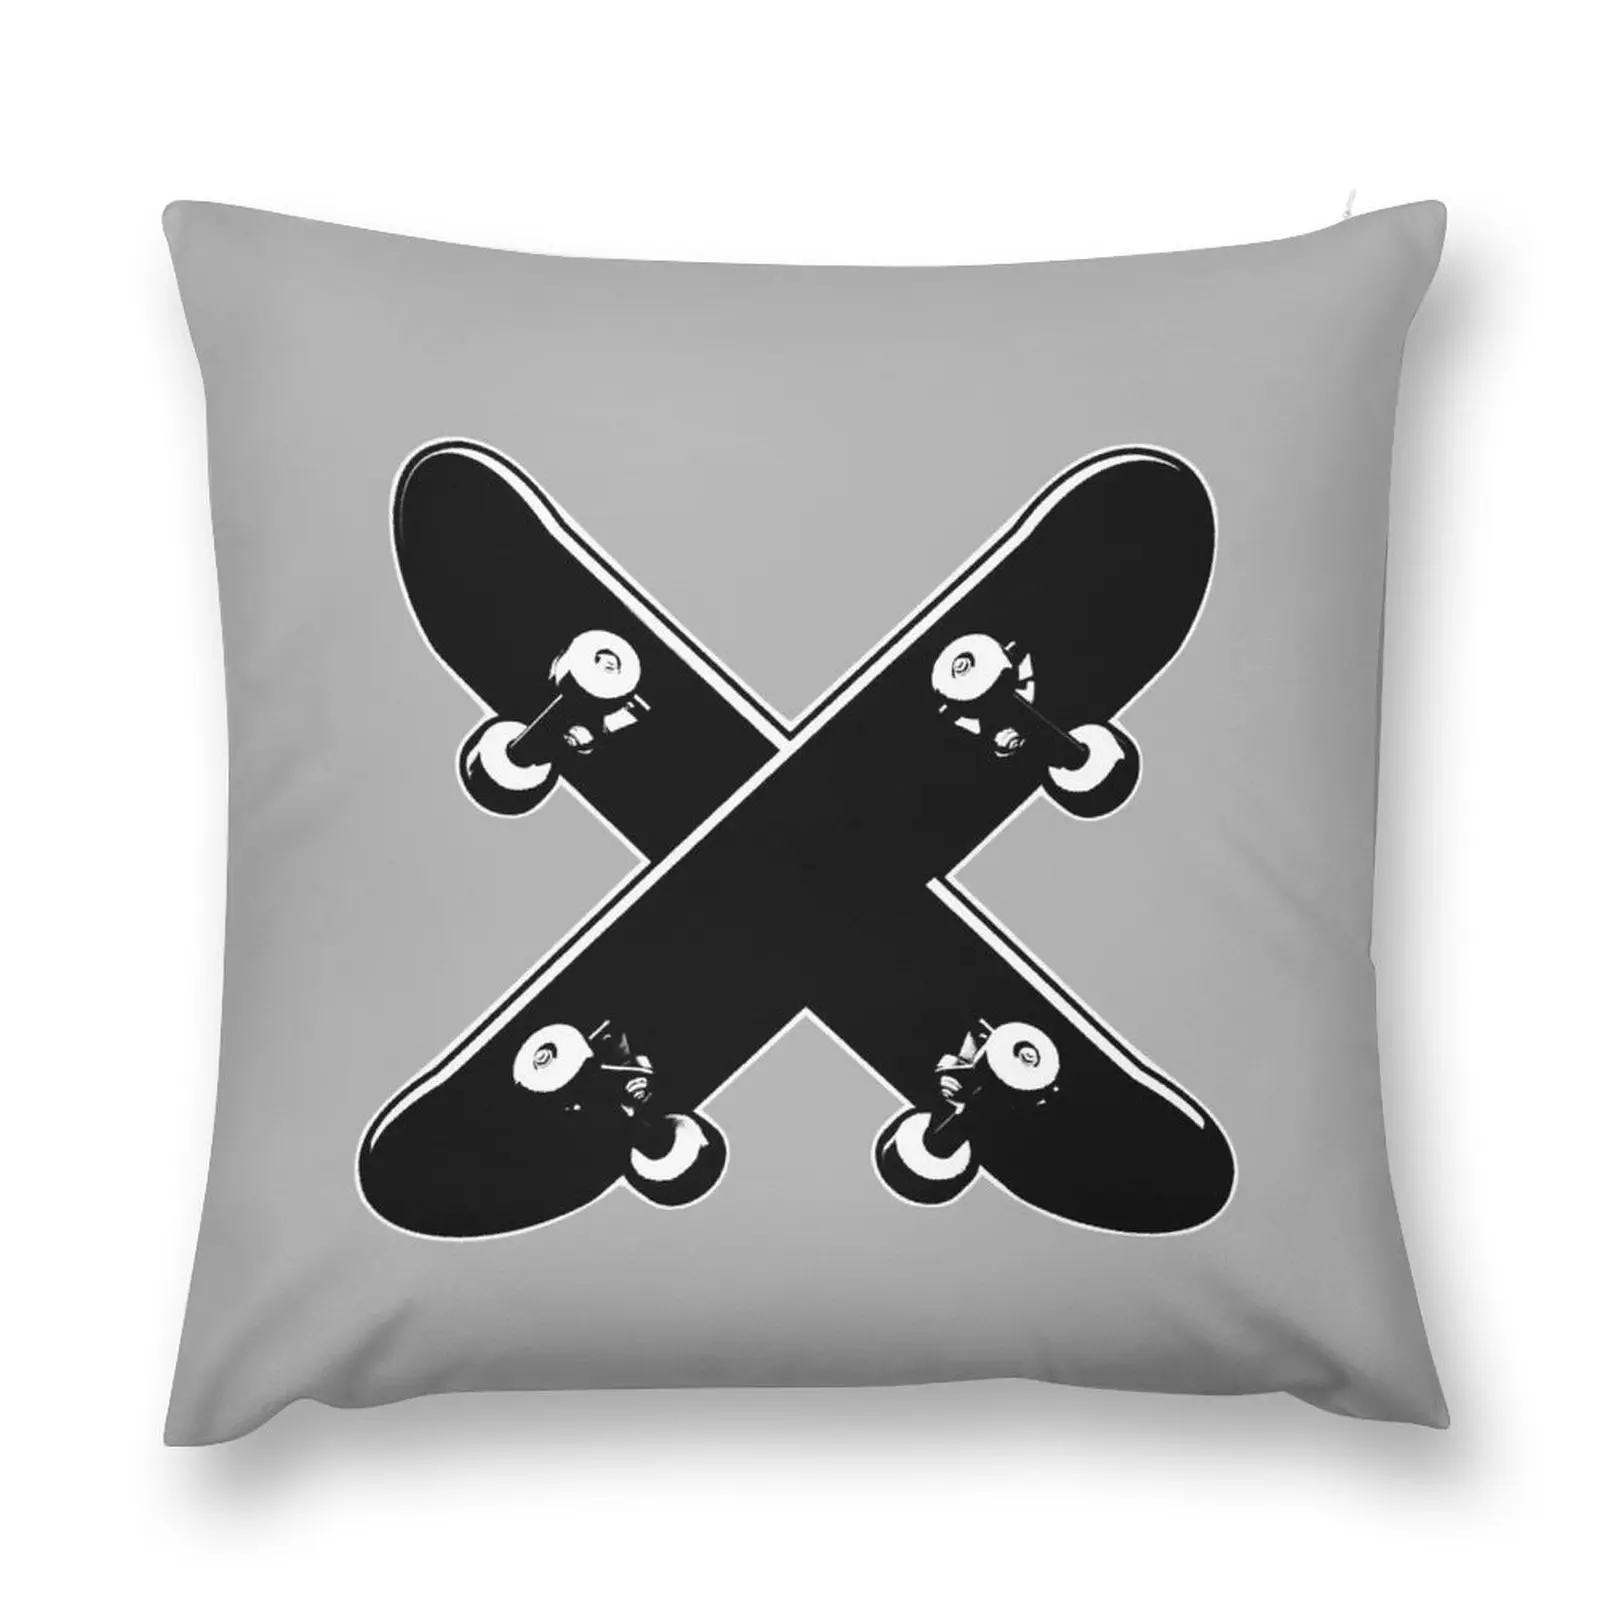 

Skate X Throw Pillow Cushion Child Christmas Throw Pillows Covers Pillows Aesthetic Pillowcases For Pillows